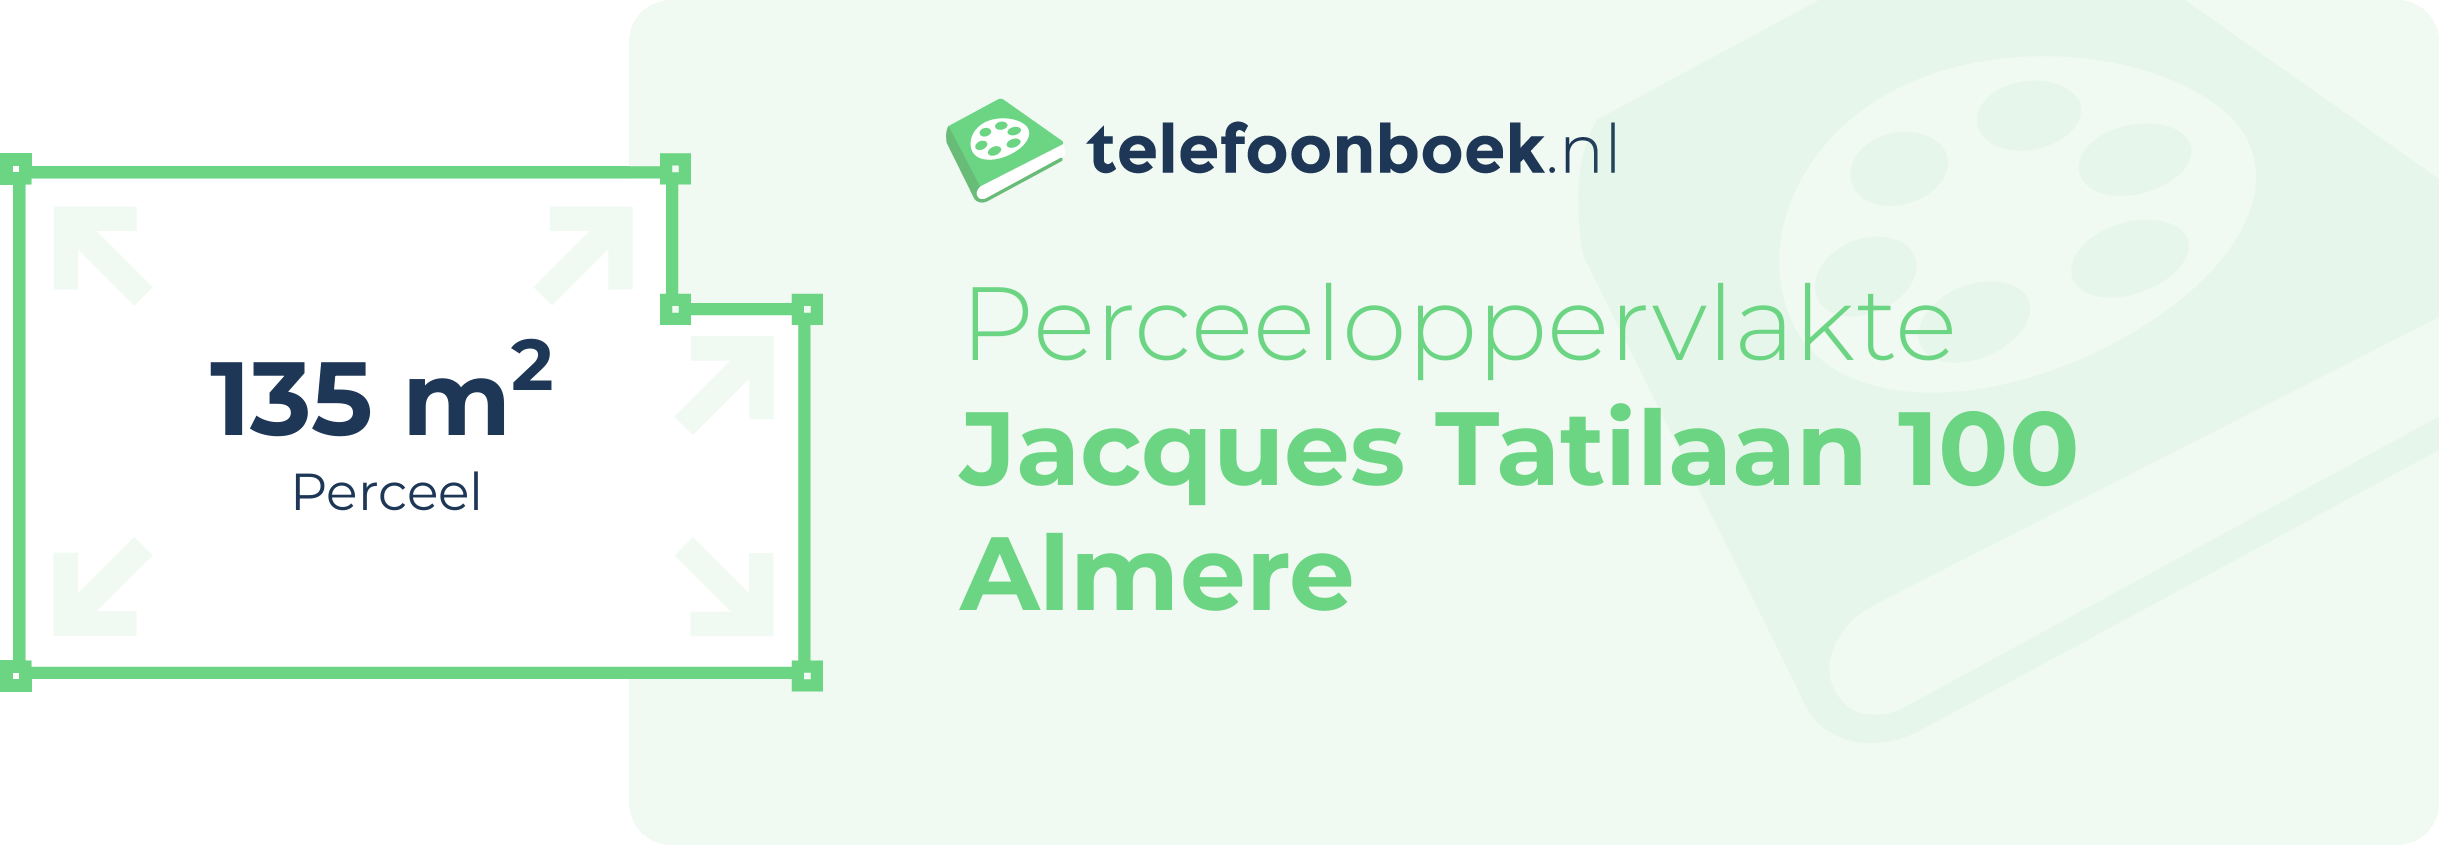 Perceeloppervlakte Jacques Tatilaan 100 Almere